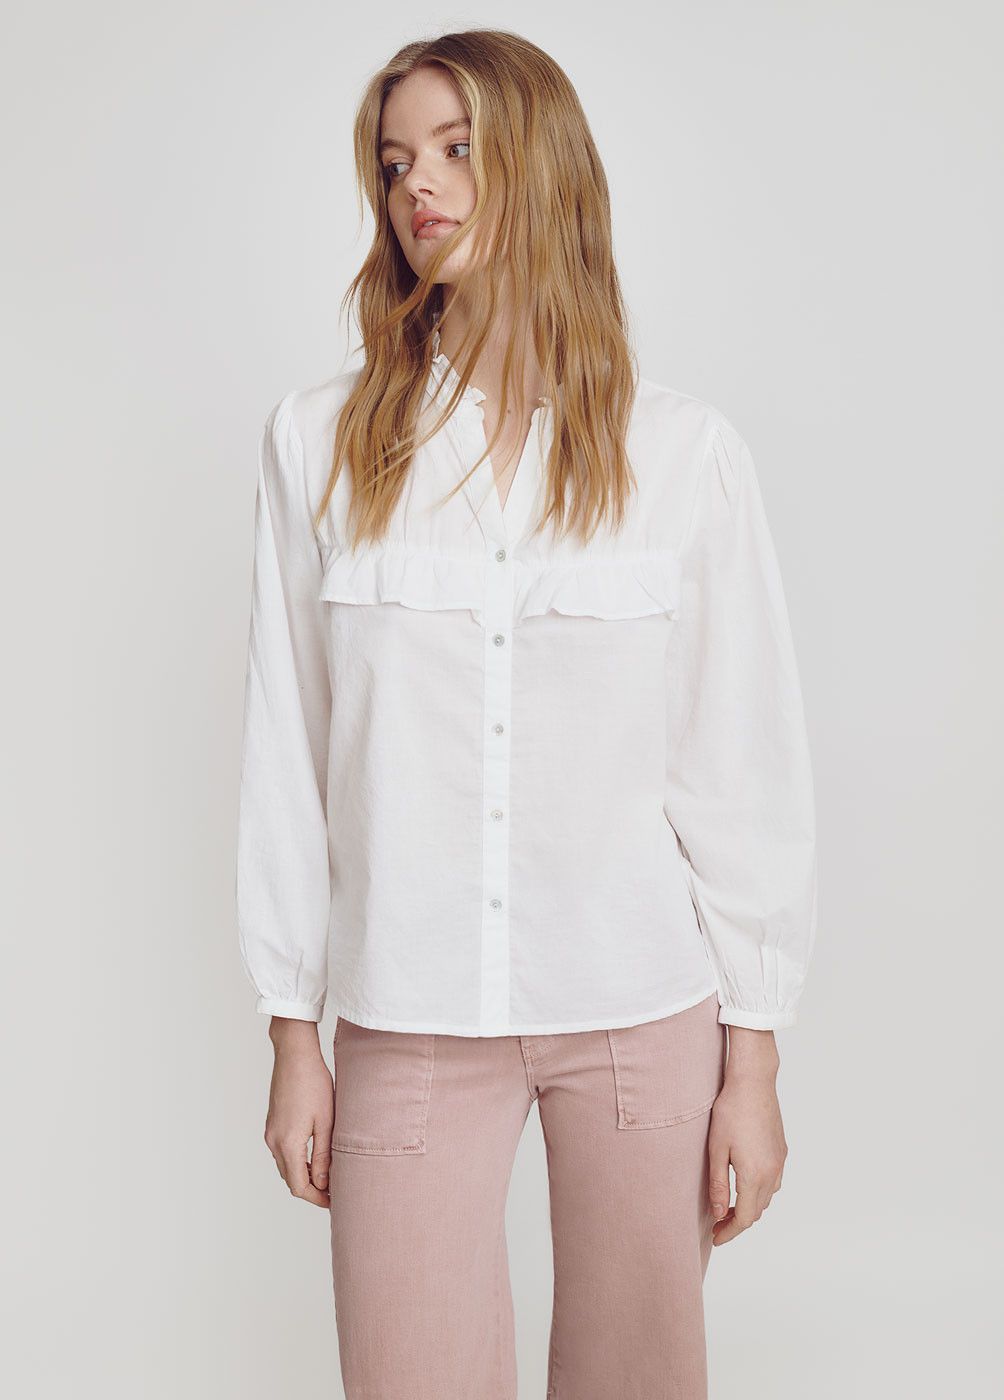 Camisas y blusas de mujer | Compra online en Brownie Spain